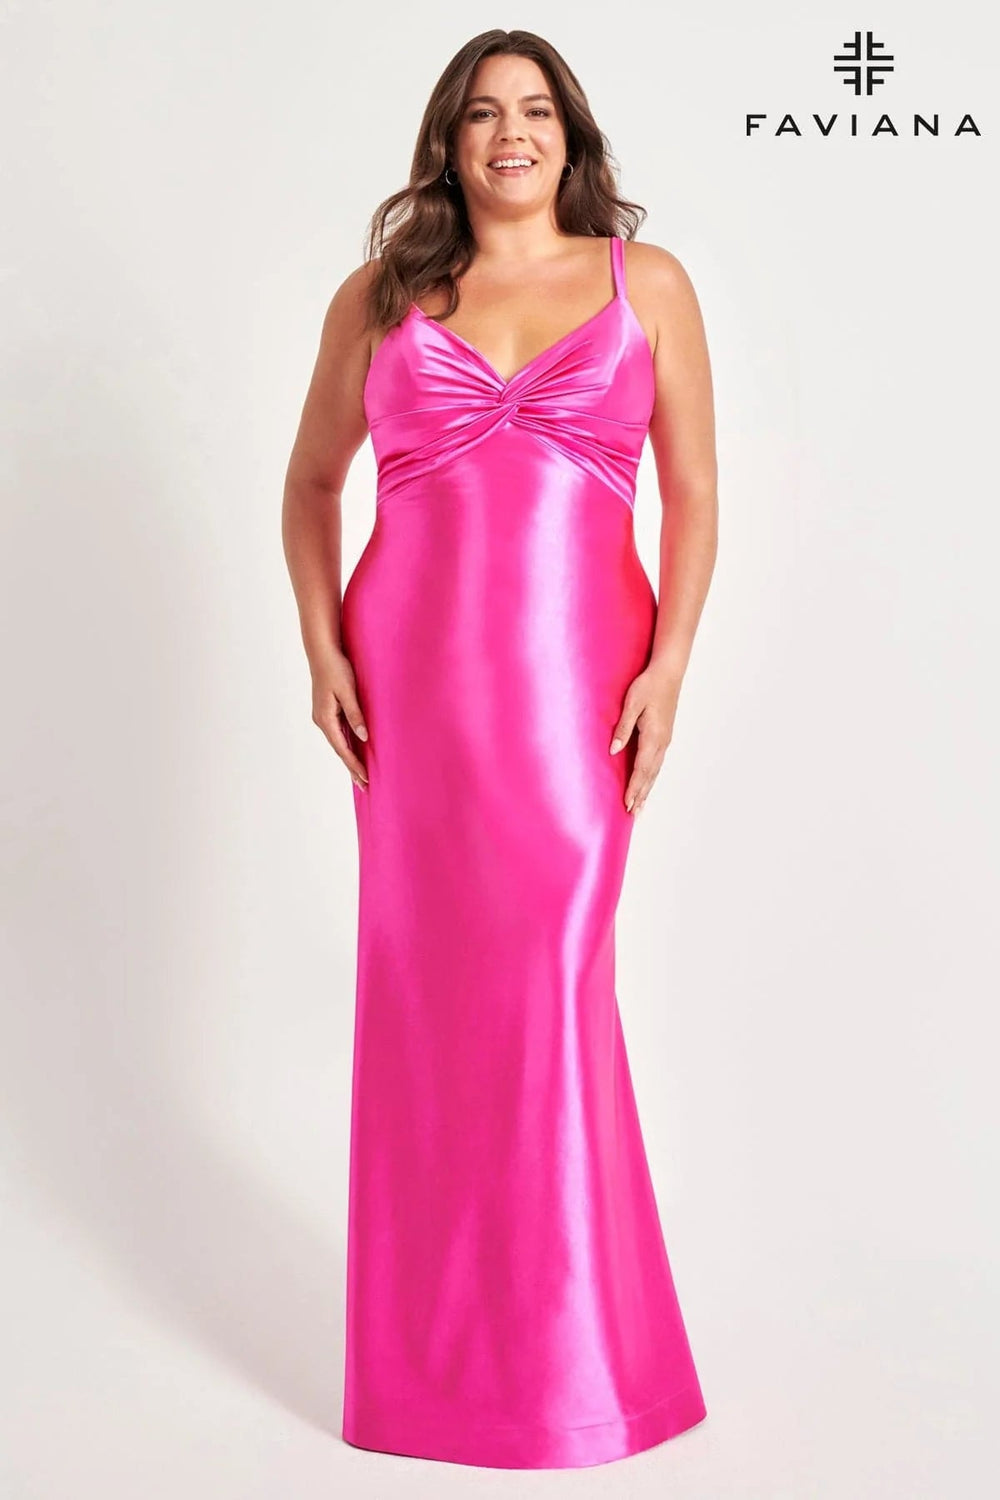 Faviana Evening Gown Plus Size FAVIANA 9549 Dress